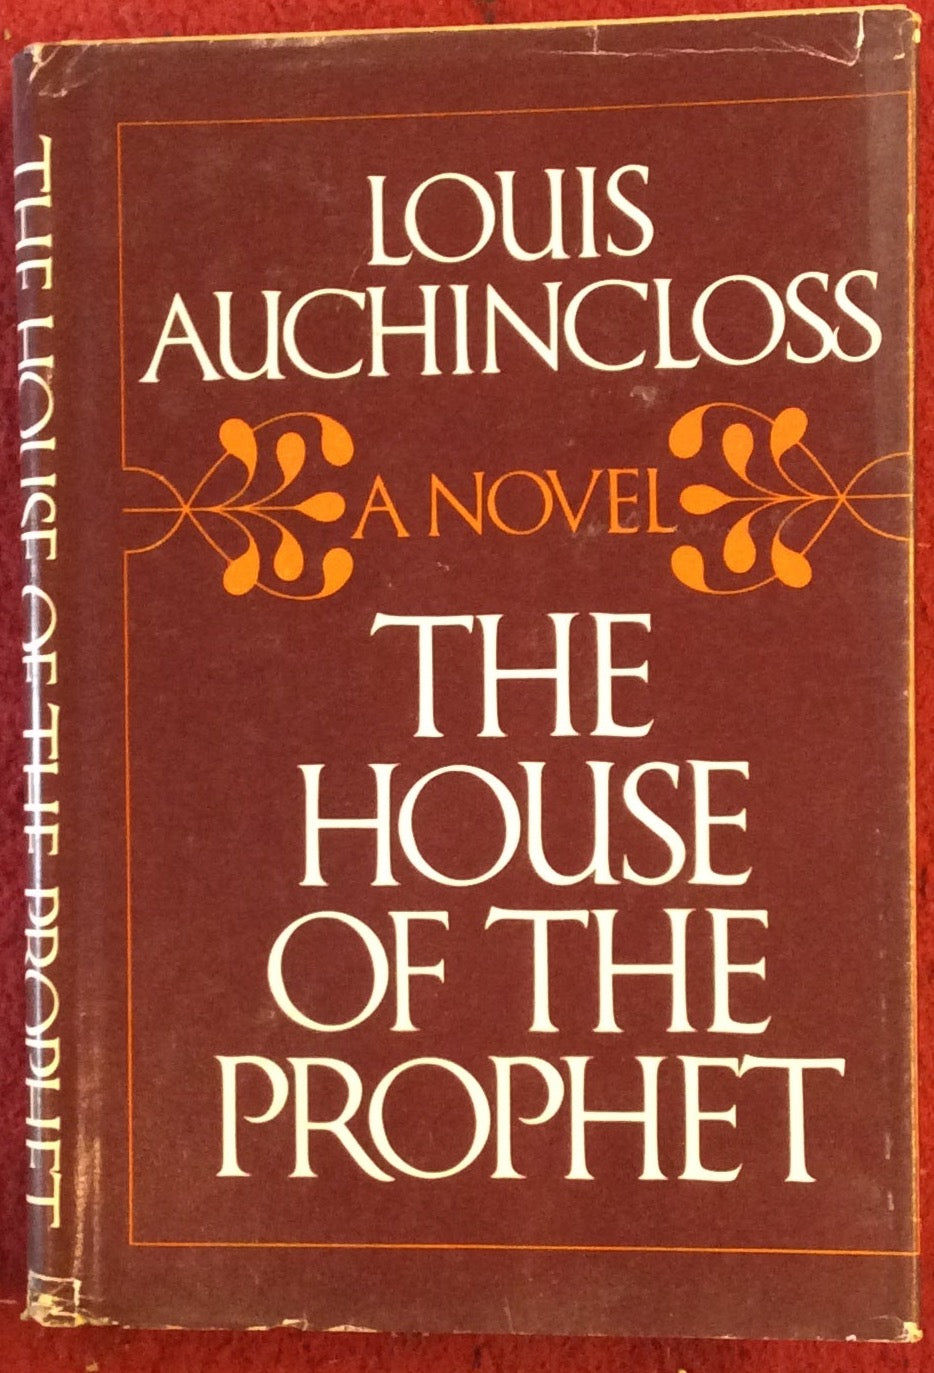 The House of the Prophet, Louis Auchincloss, Houghton Mifflin, 1980*